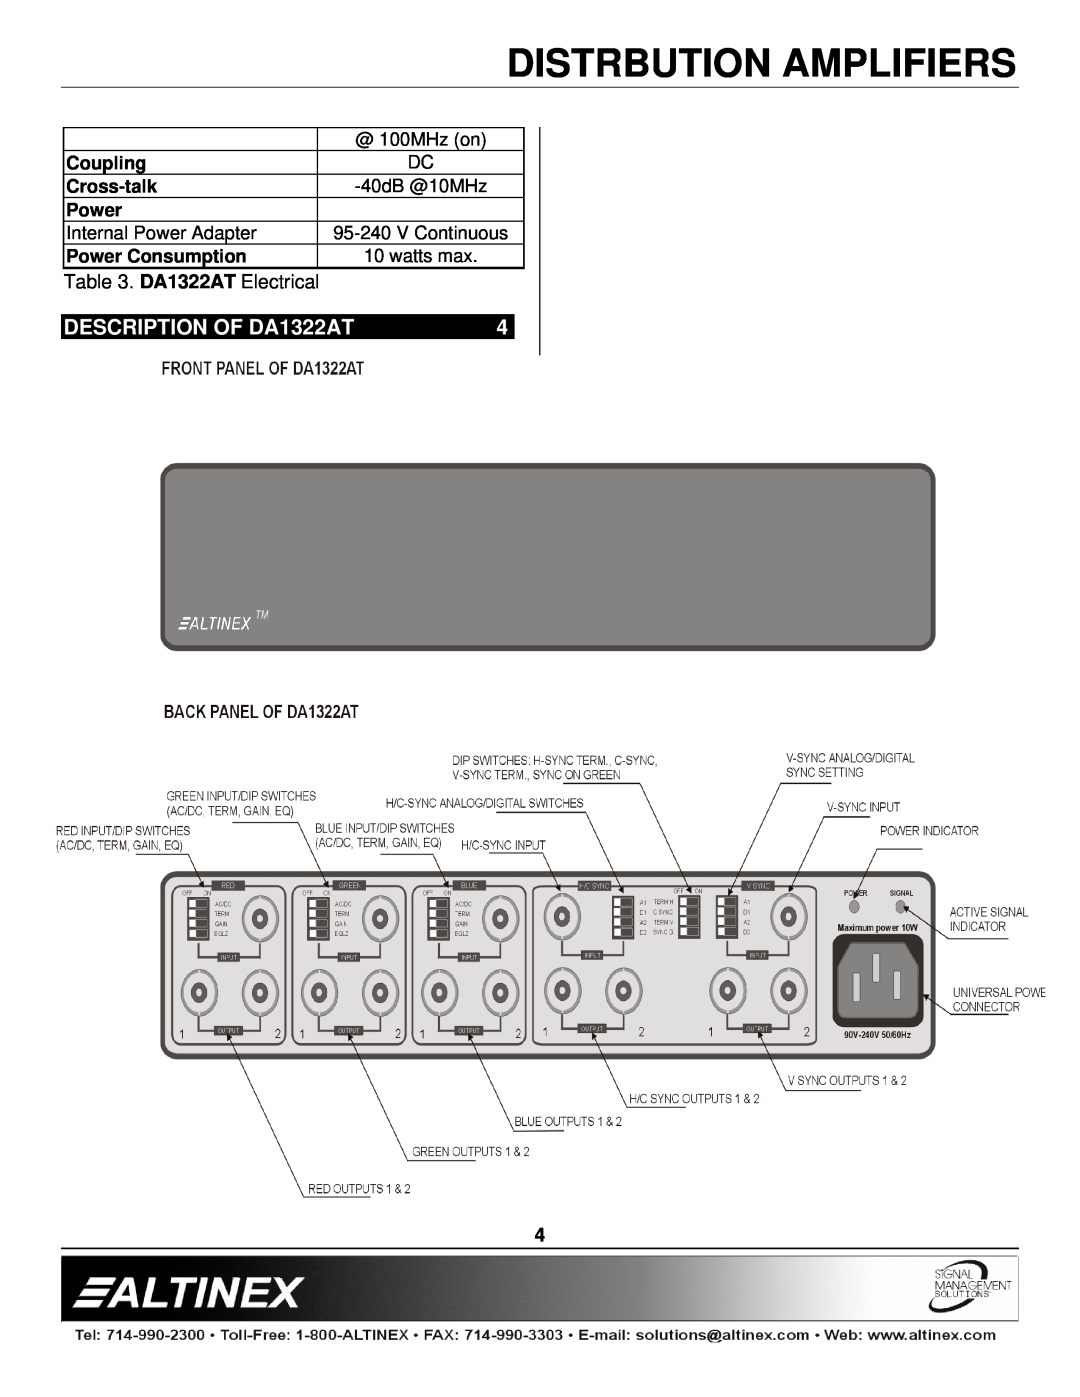 Altinex manual DESCRIPTION OF DA1322AT, Distrbution Amplifiers, DA1322AT Electrical 